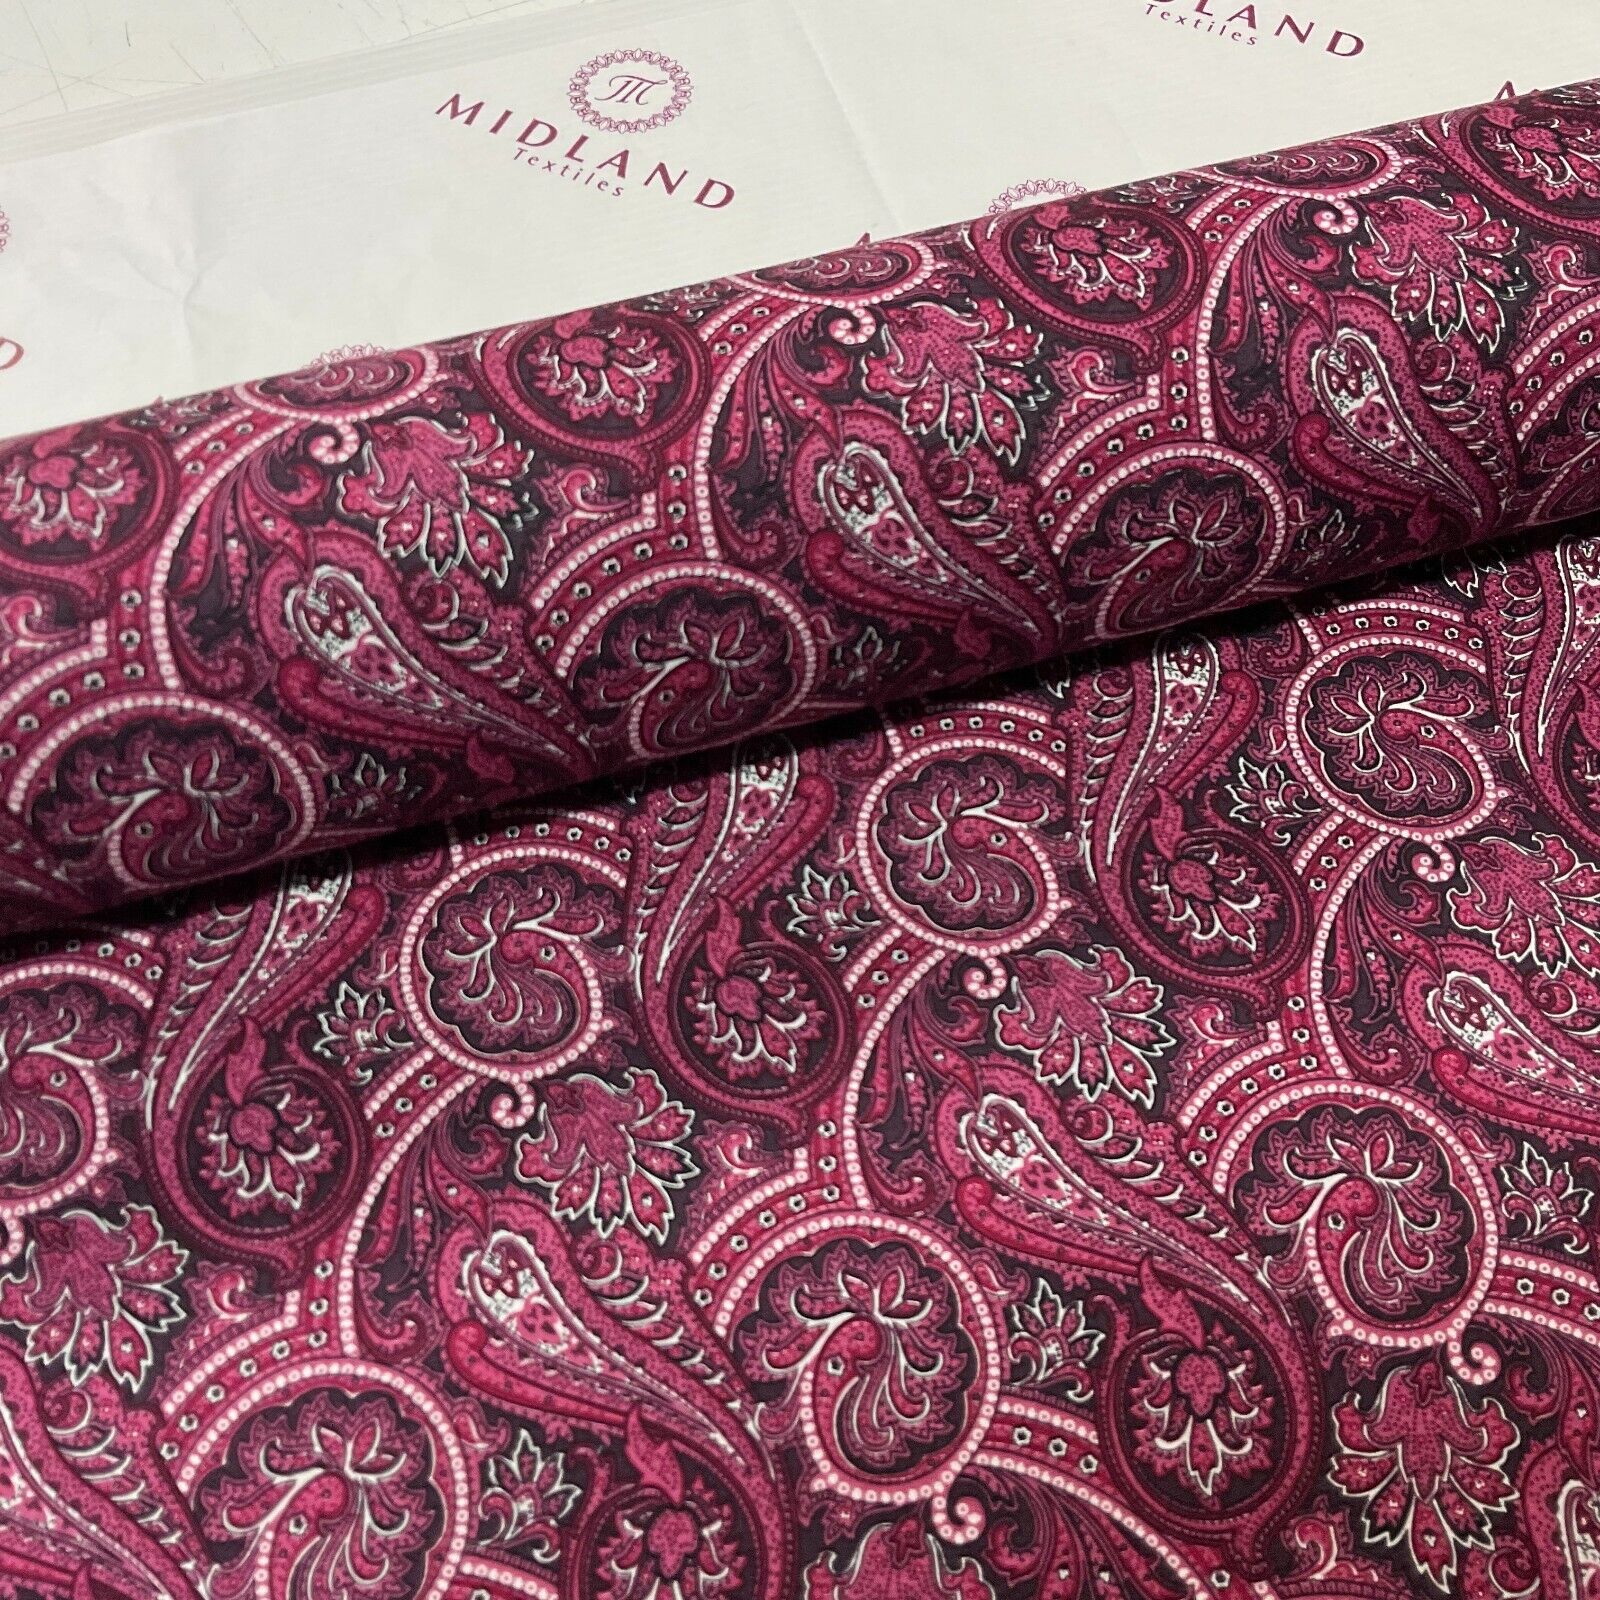 Vintage Paisley 100% cotton poplin printed dress craft fabric 112cm wide M1745